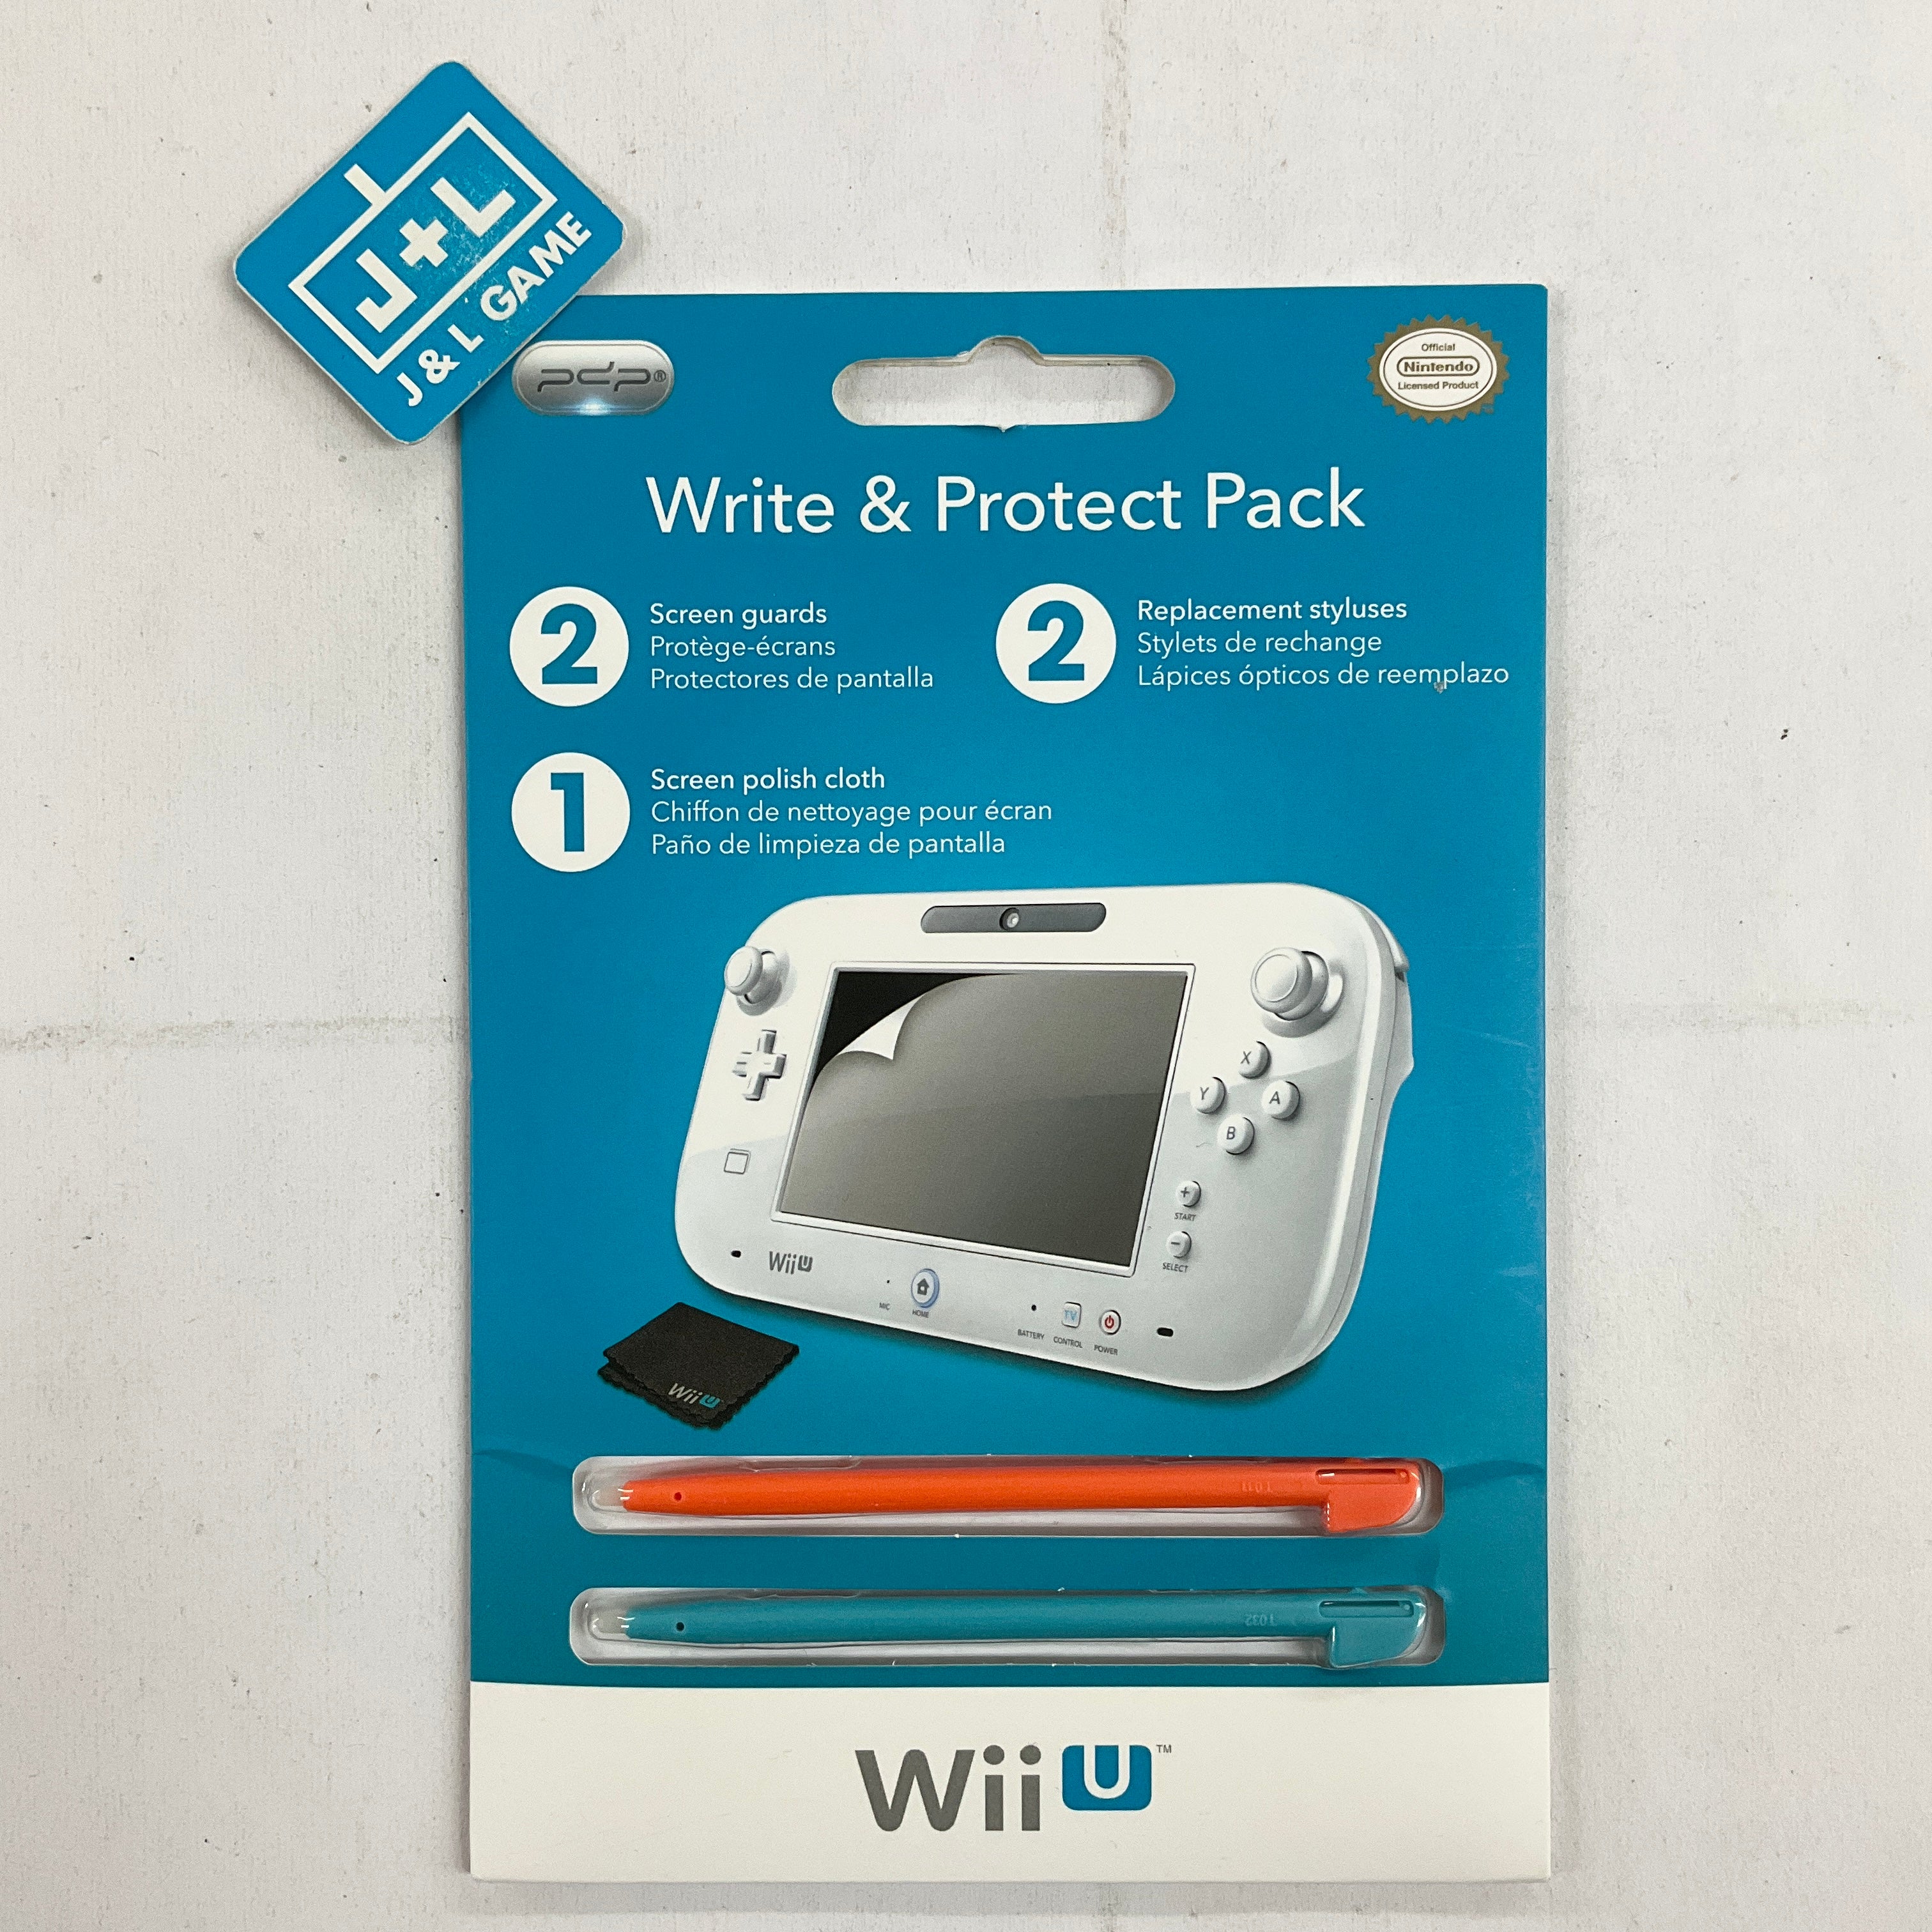 PDP Nintendo WiiU Write and Protect Pack - Nintendo WiiU Accessories PDP   